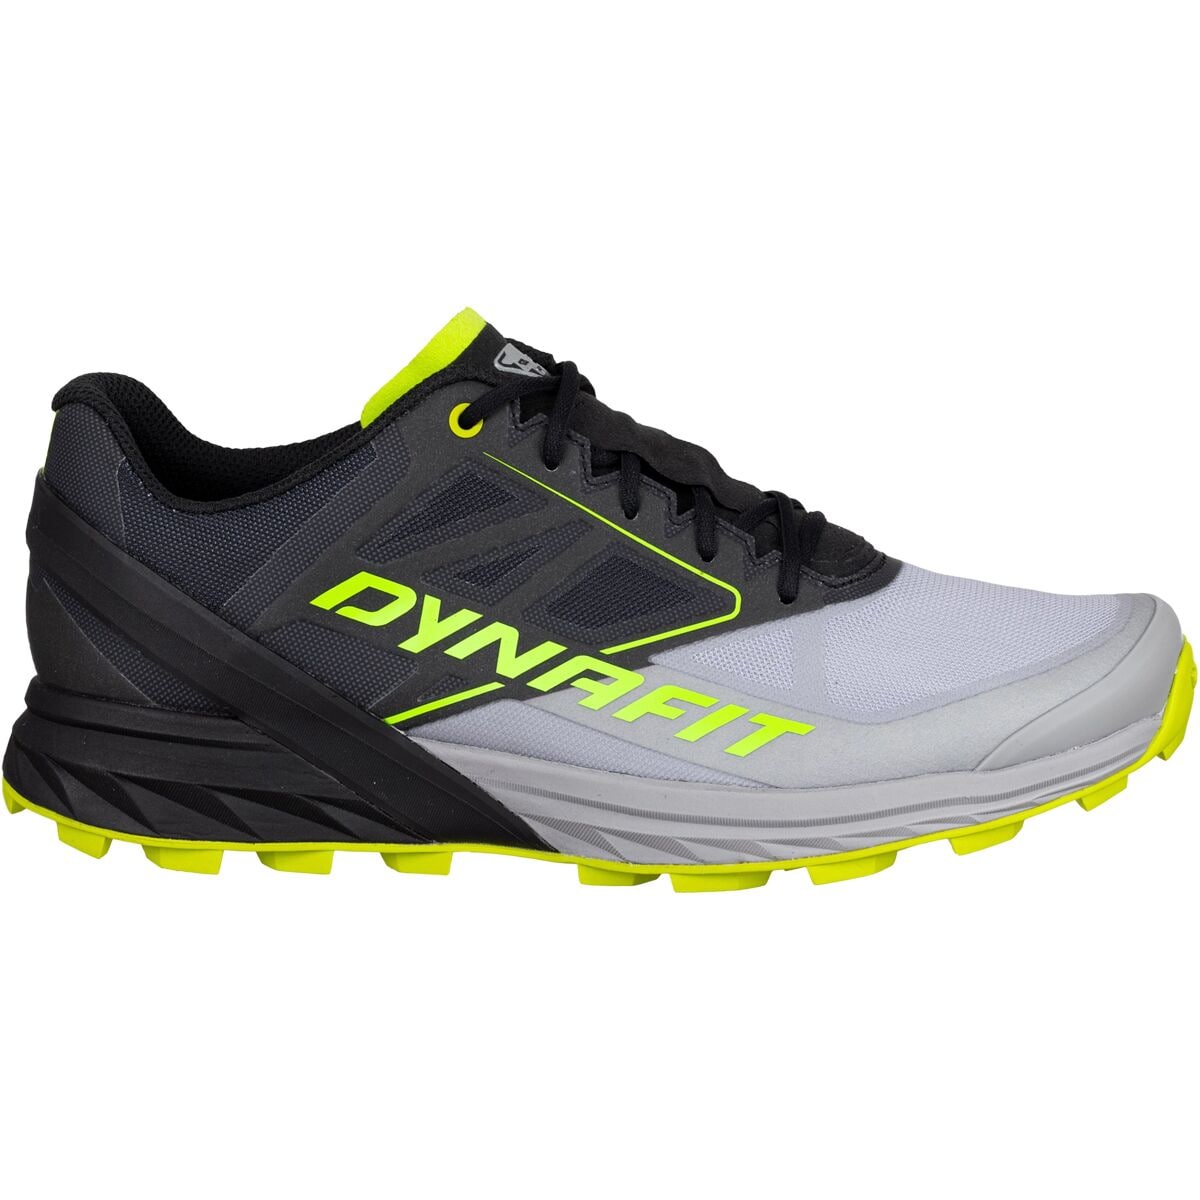 Dynafit Alpine Trail Running Shoe - Men's | eBay